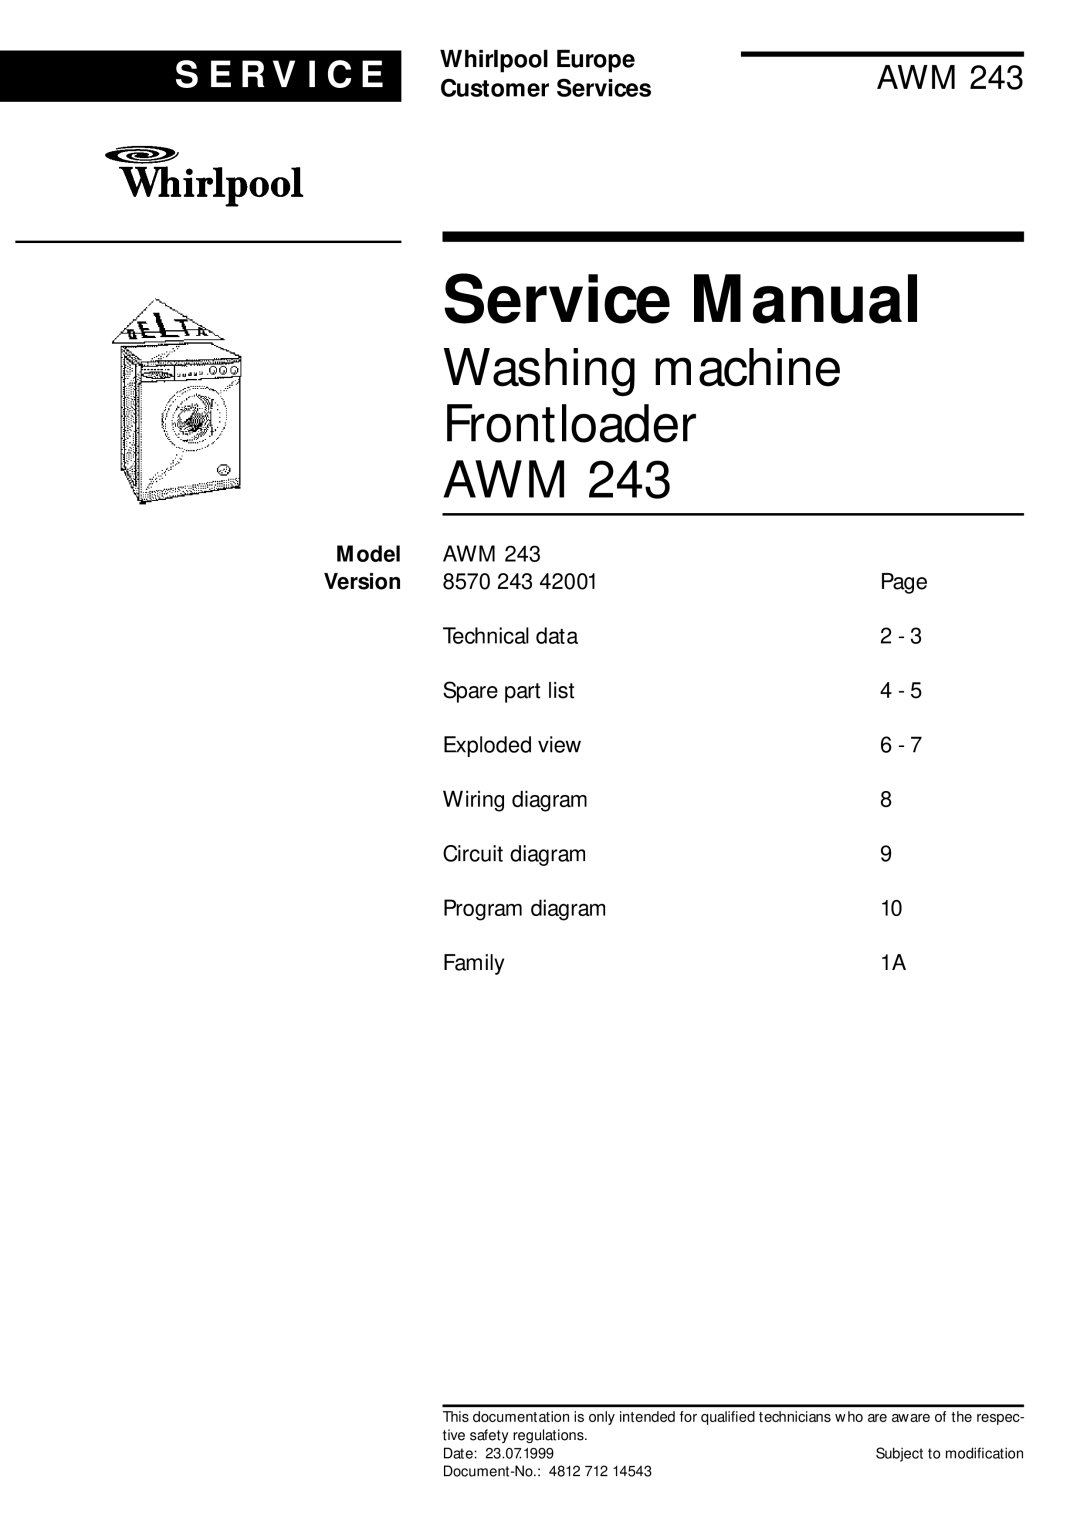 Whirlpool AMW, 243 service manual Model, Service Manual, Washing machine Frontloader AWM, S E R V I C E, Whirlpool Europe 